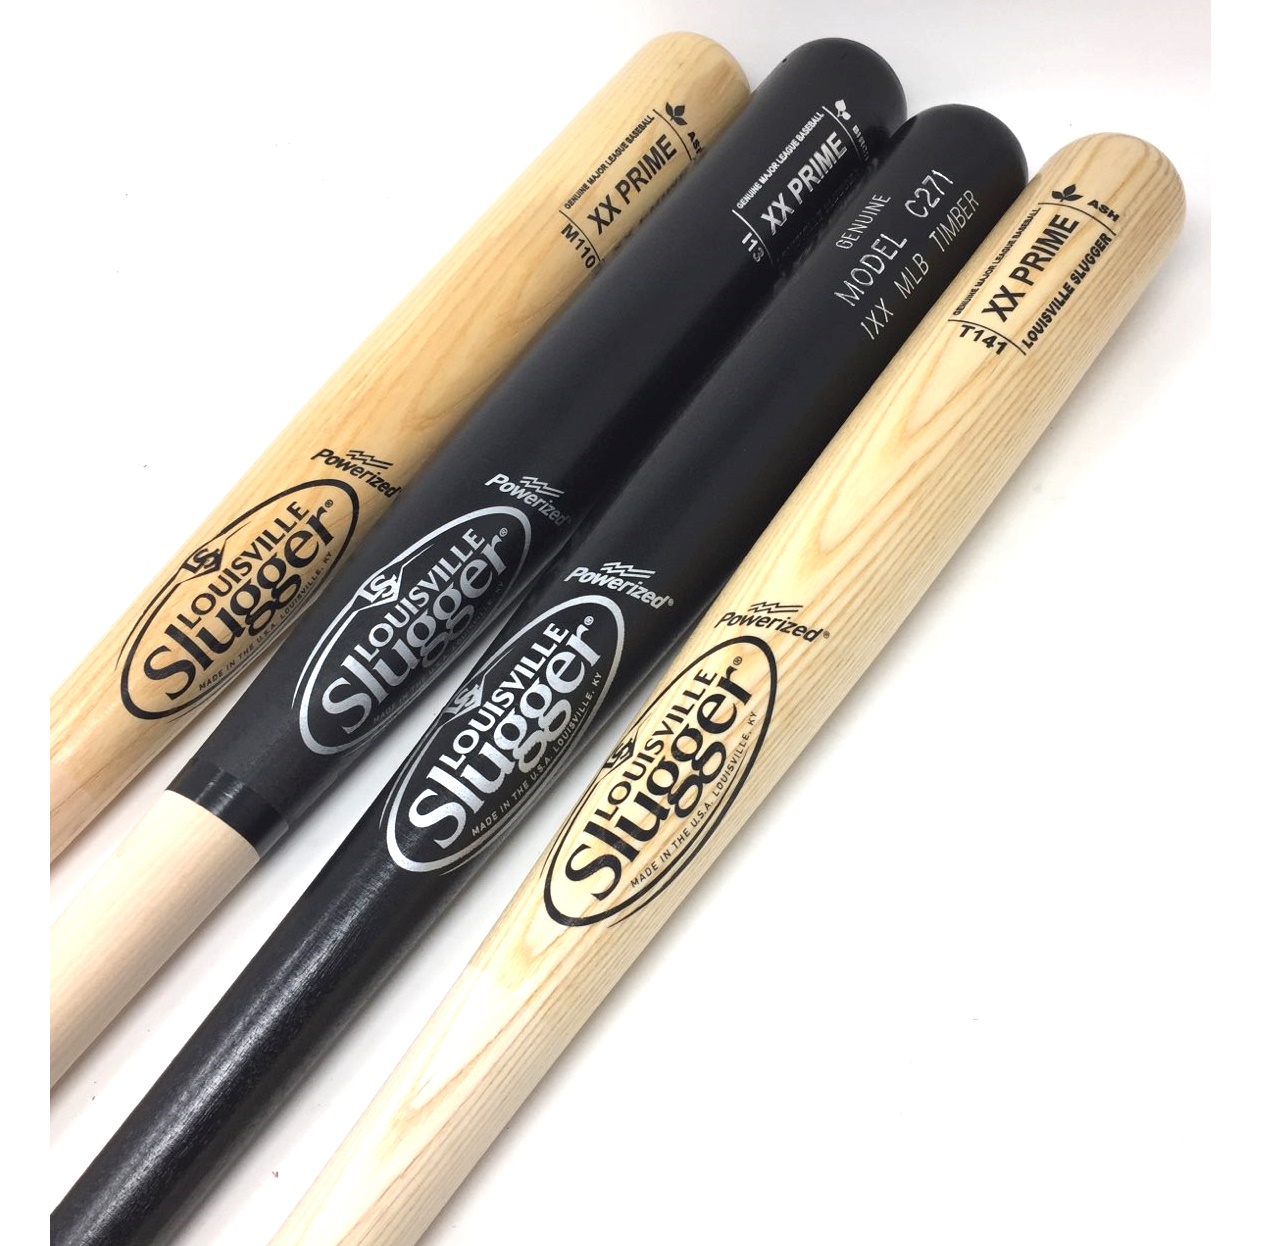 louisville-slugger-wood-baseball-bat-pack-33-5-inch-4-bats BATPACK-0008 Louisville Does Not Apply 33 Inch Wood Bats from Louisville Slugger.  1. XX Prime Birch